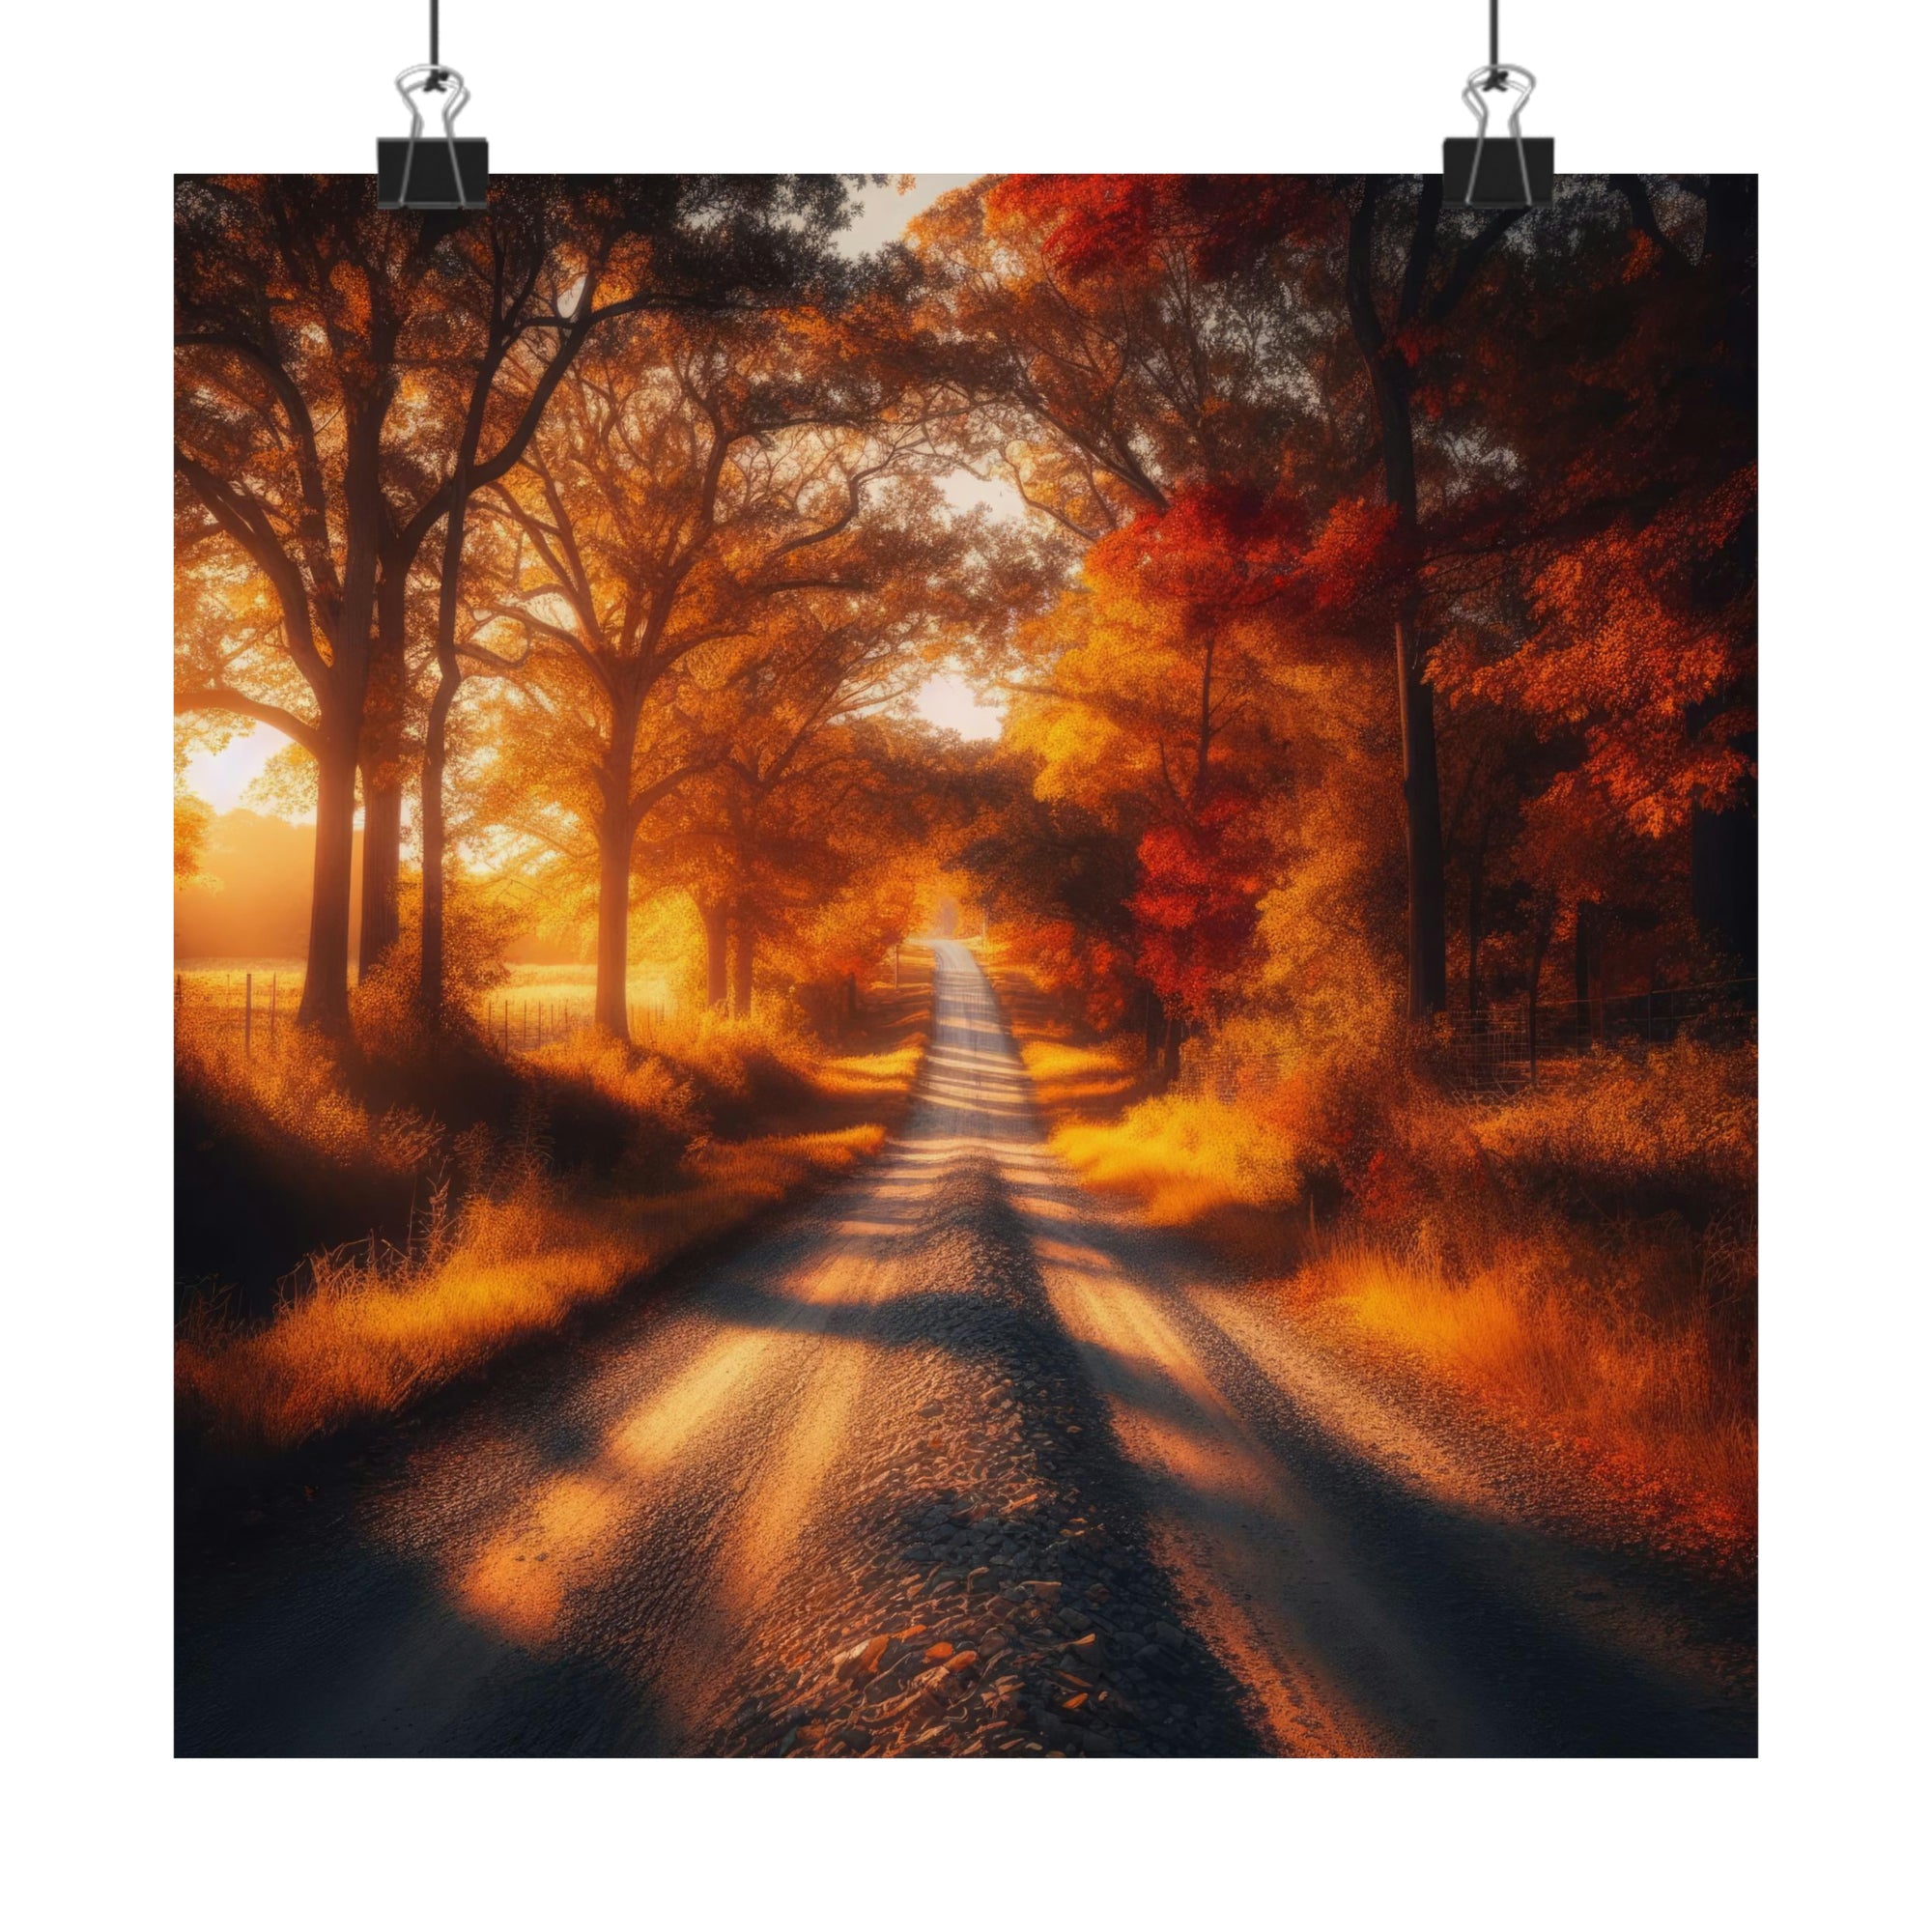 El espectacular lienzo del otoño Póster